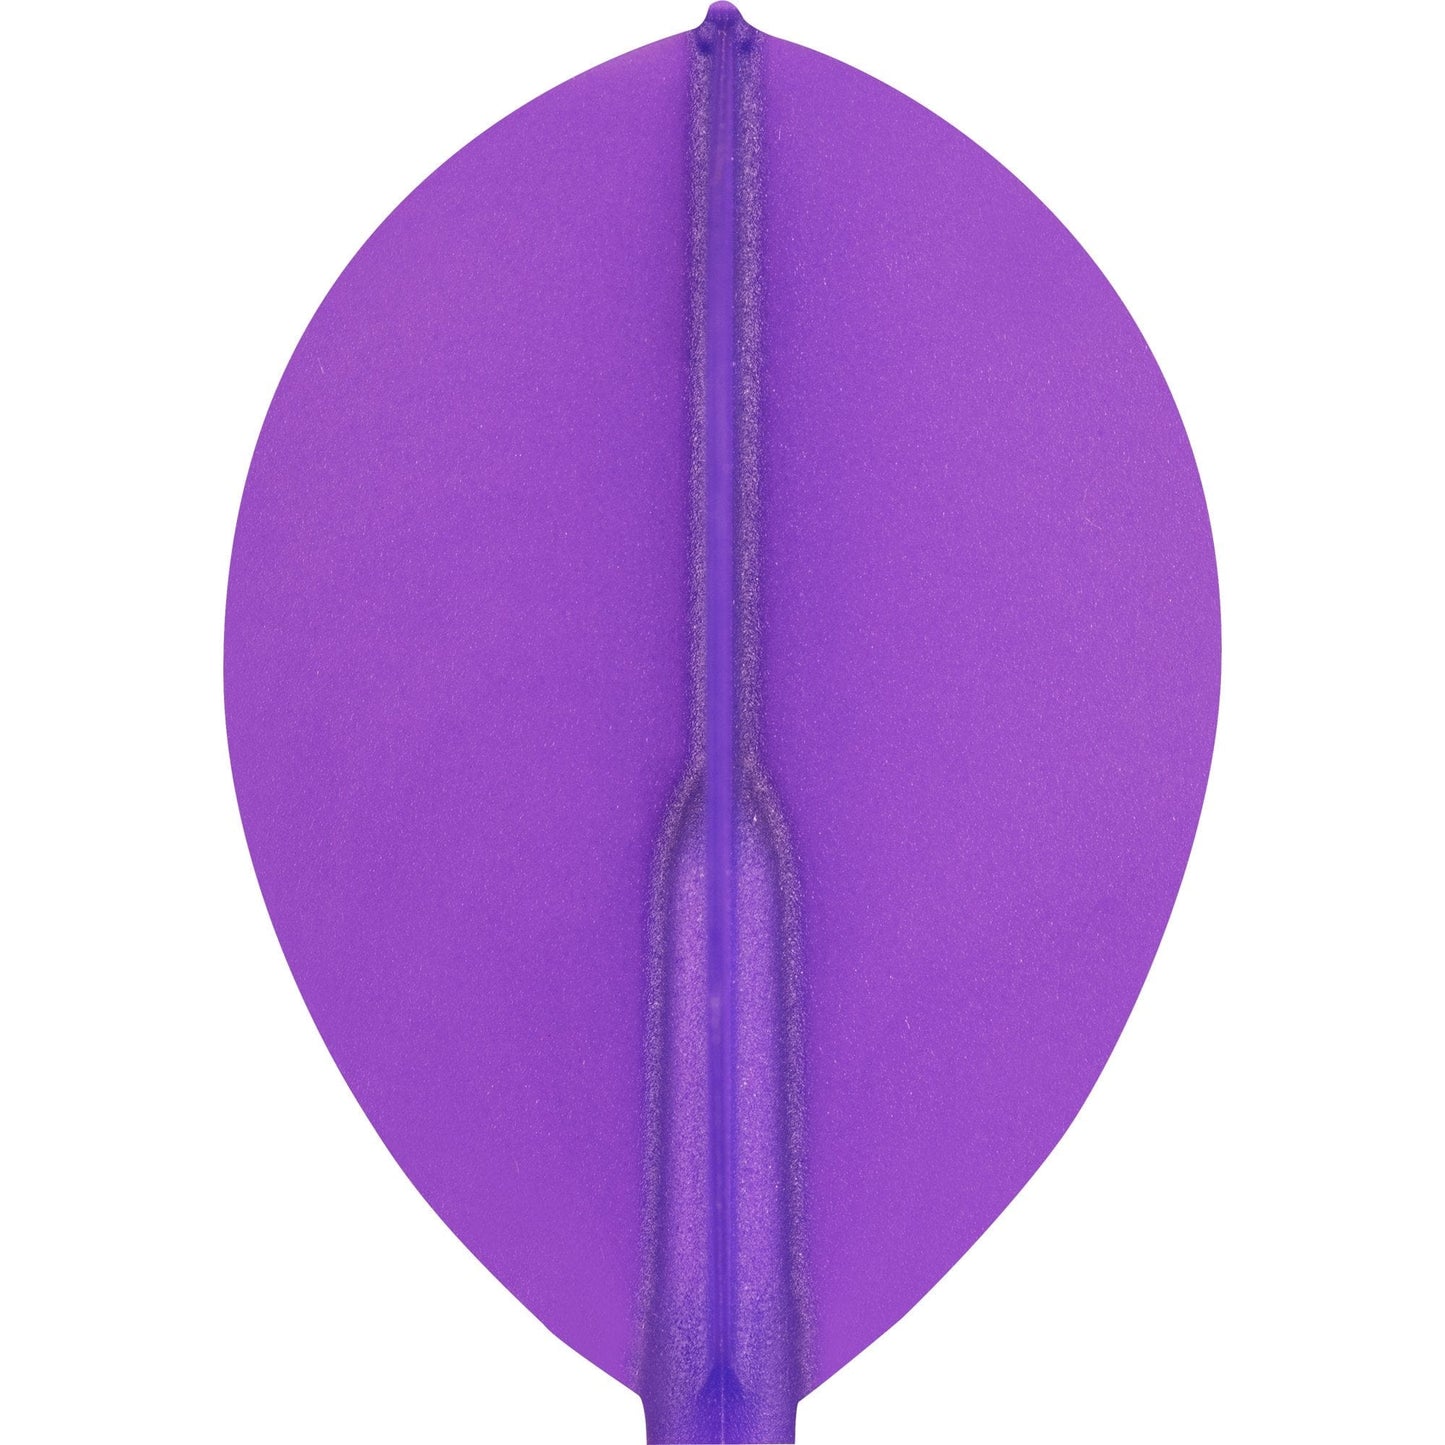 Cosmo Darts - Fit Flight - Set of 6 - Teardrop Purple